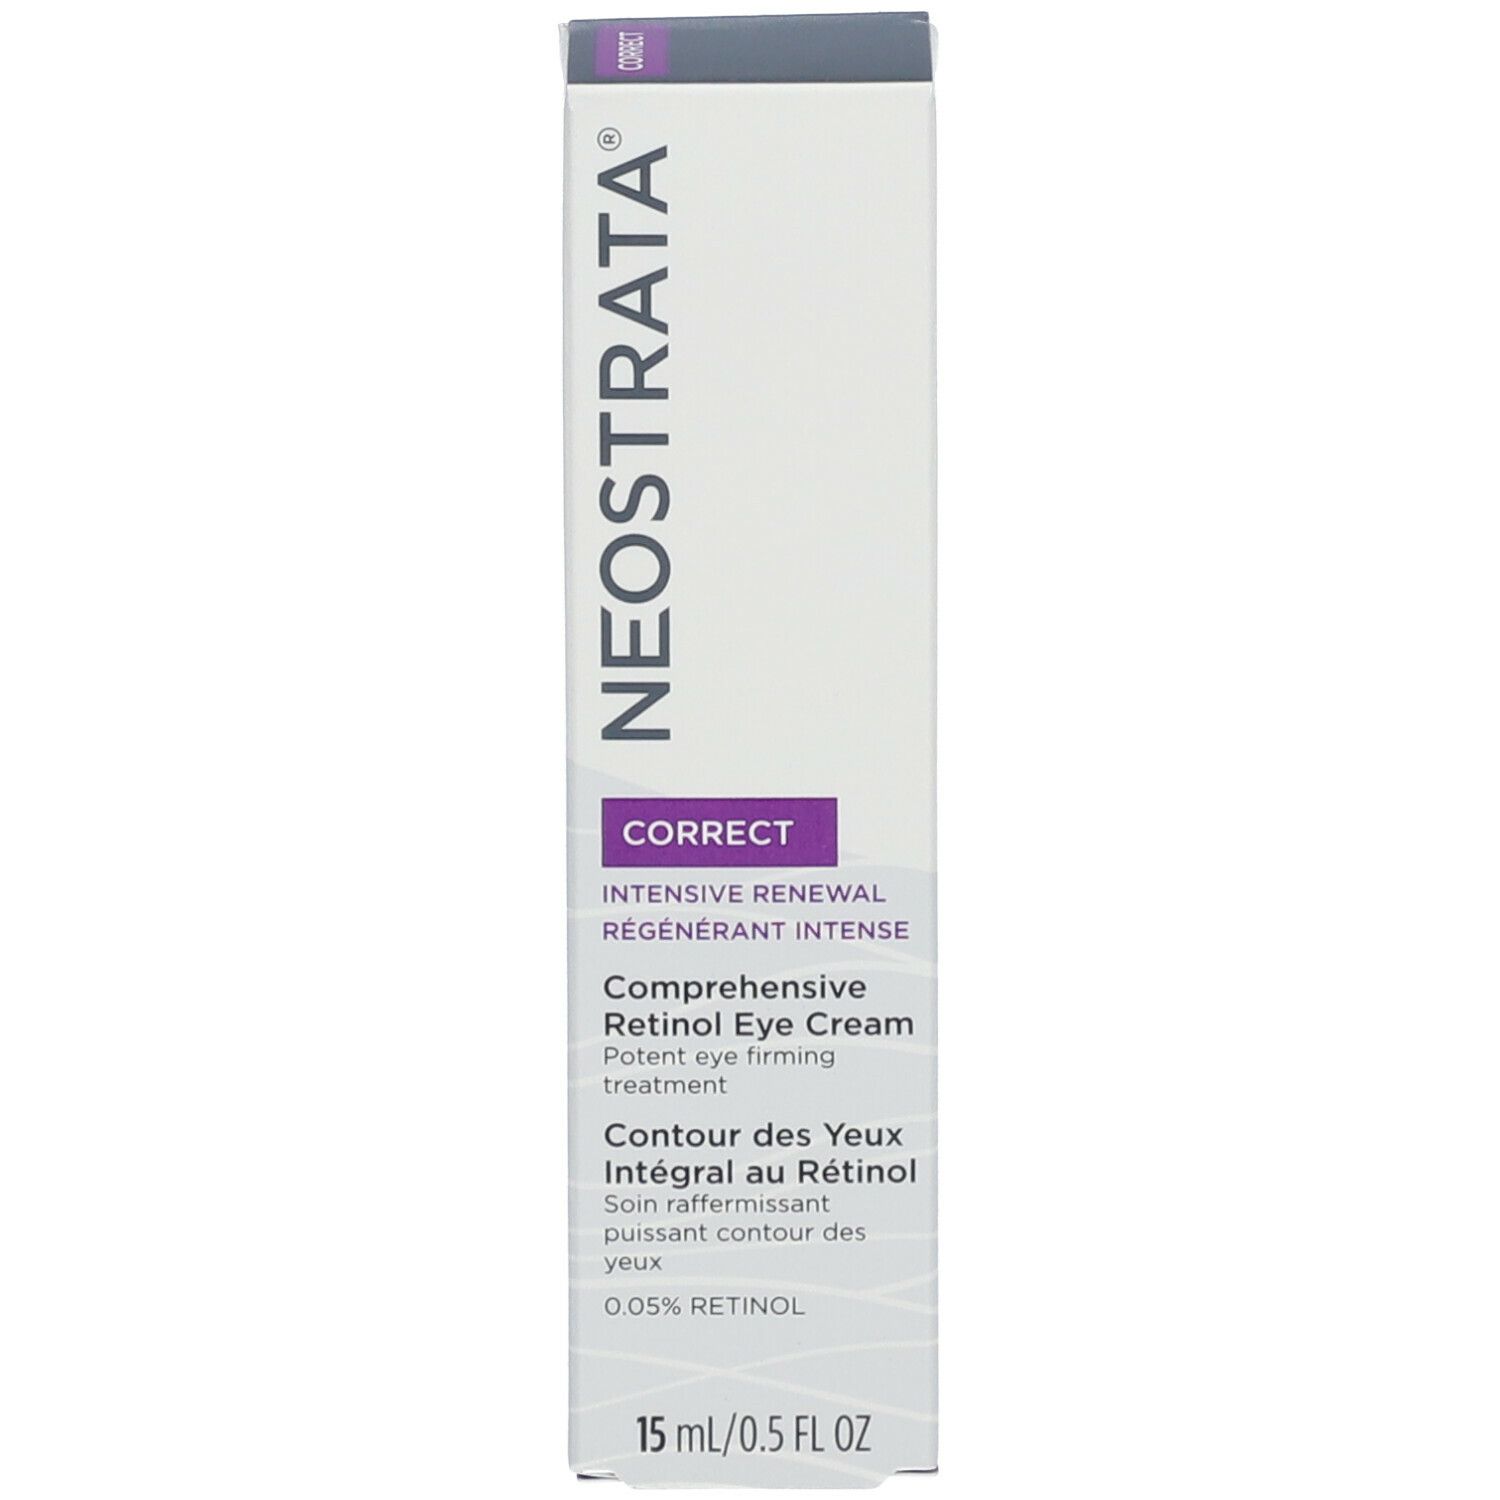 NeoStrata® Correct Retinol Eye Cream